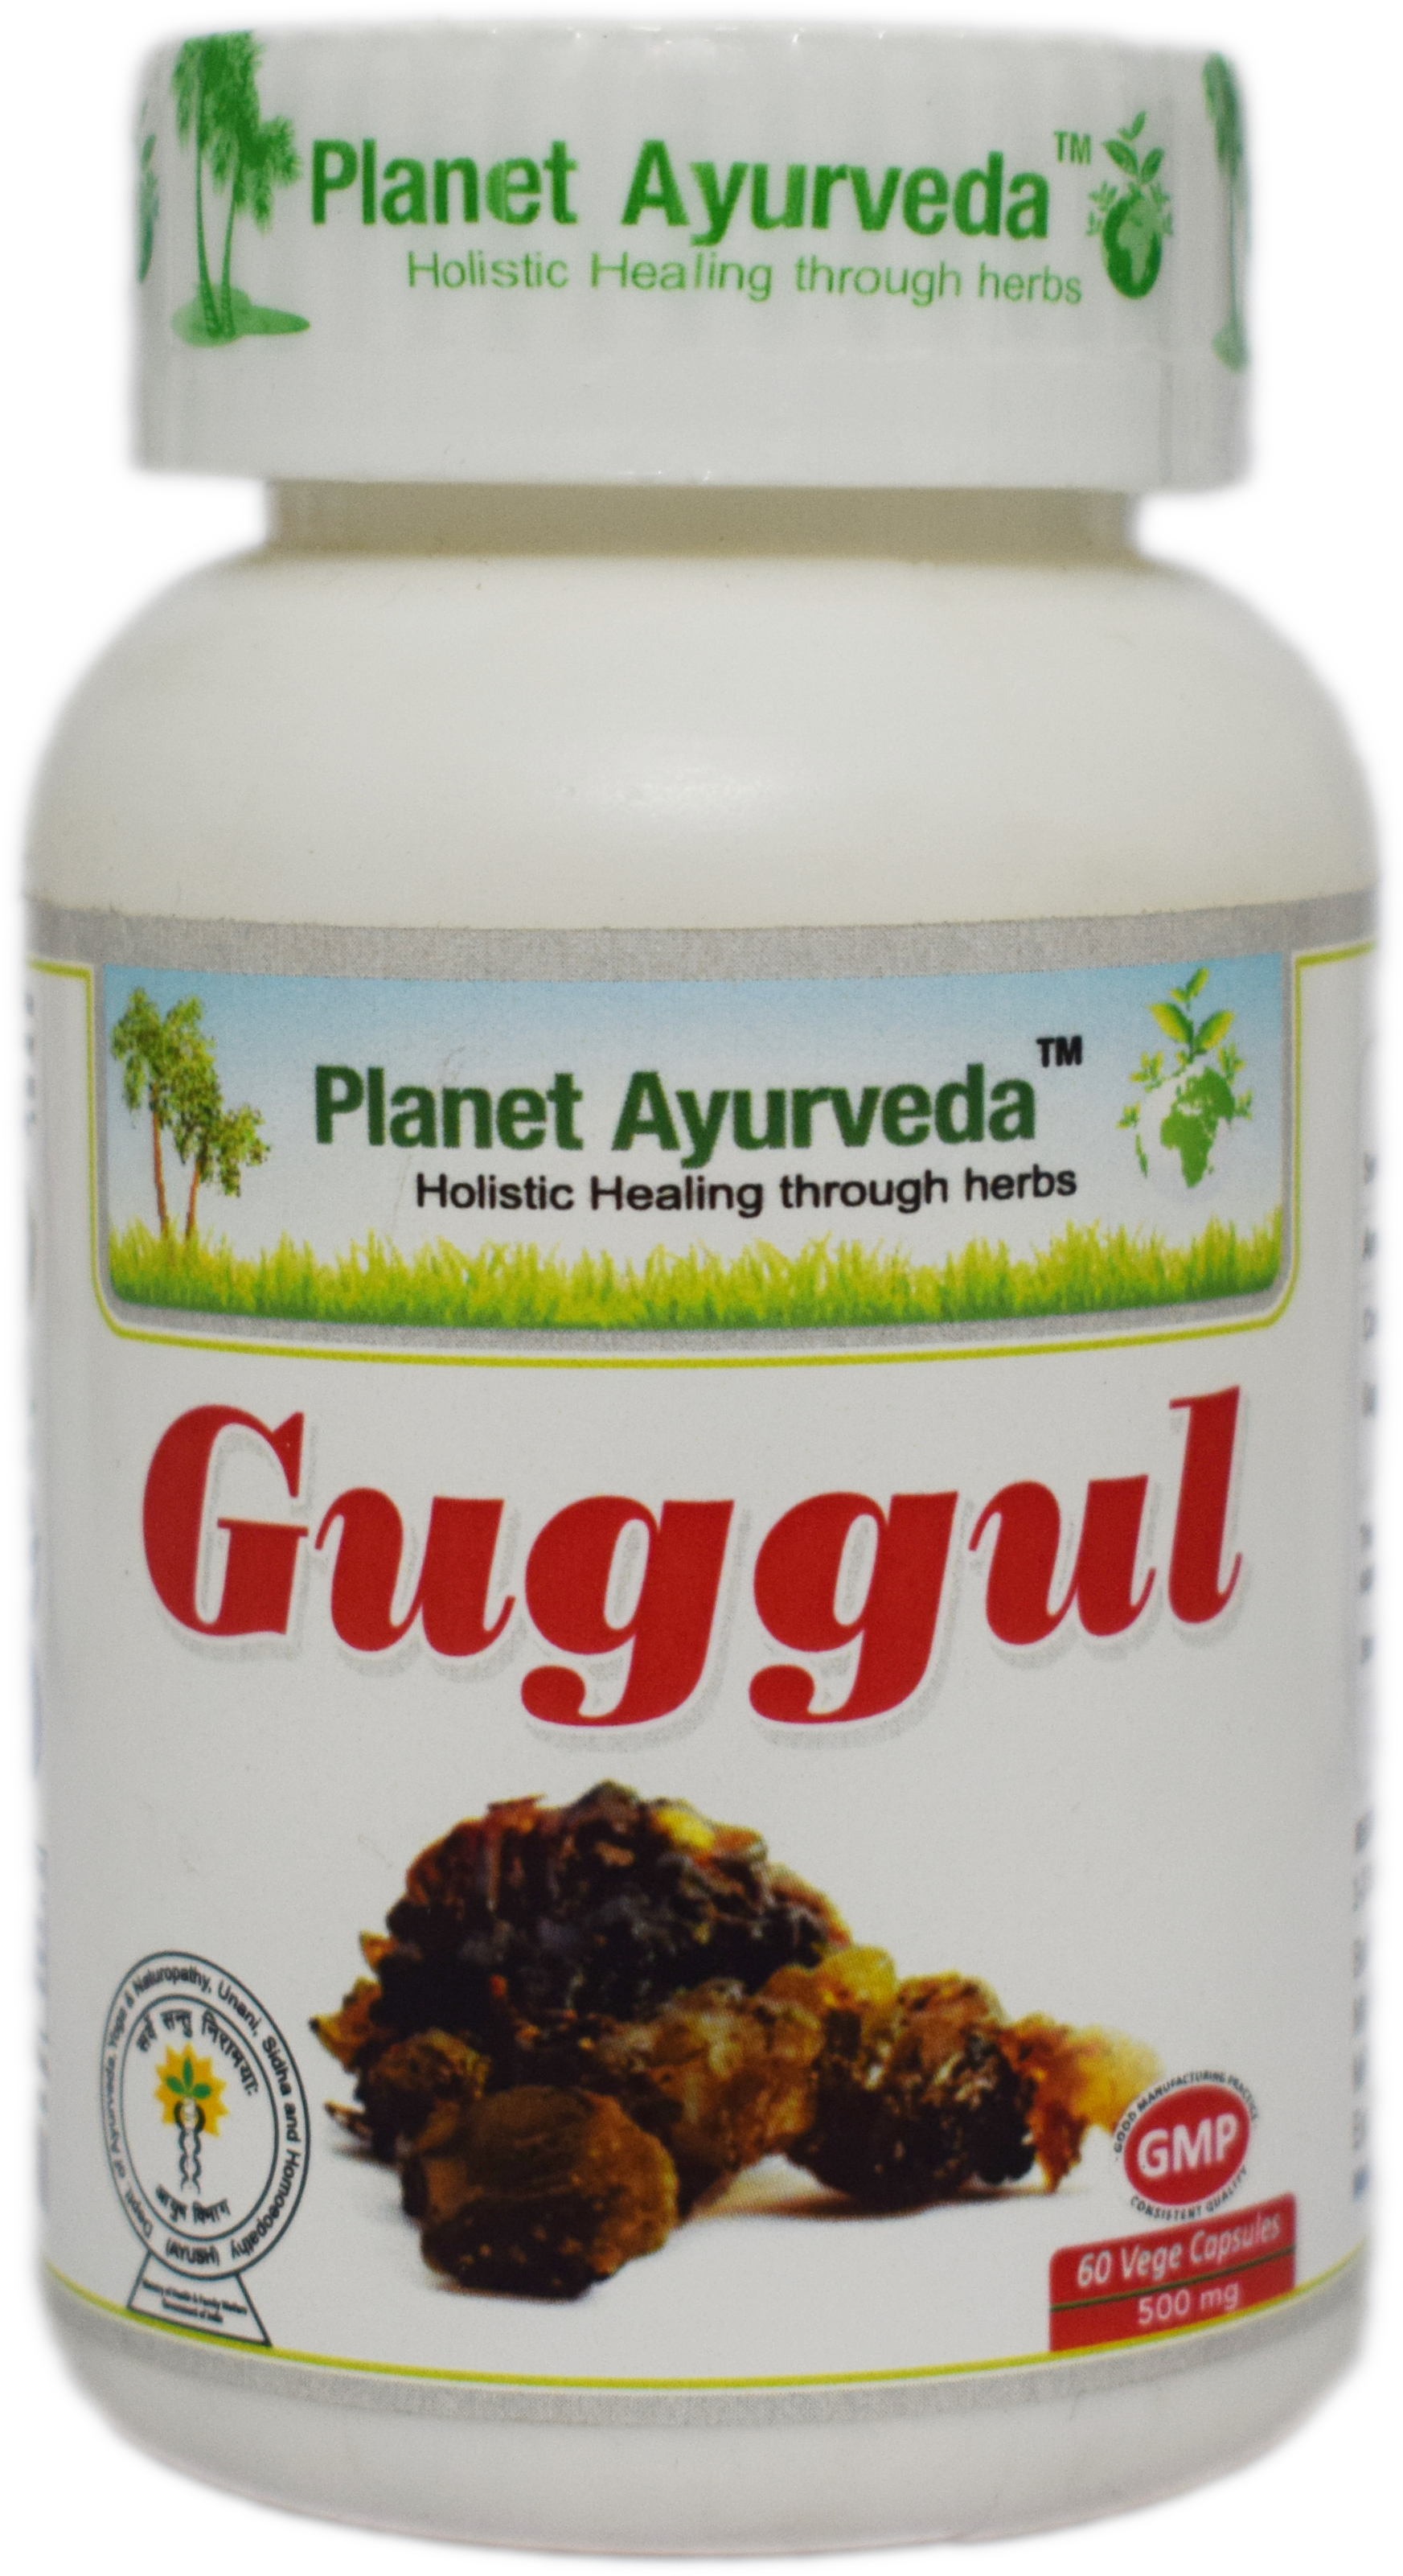 Buy Planet Ayurveda Guggul Capsules at Best Price Online